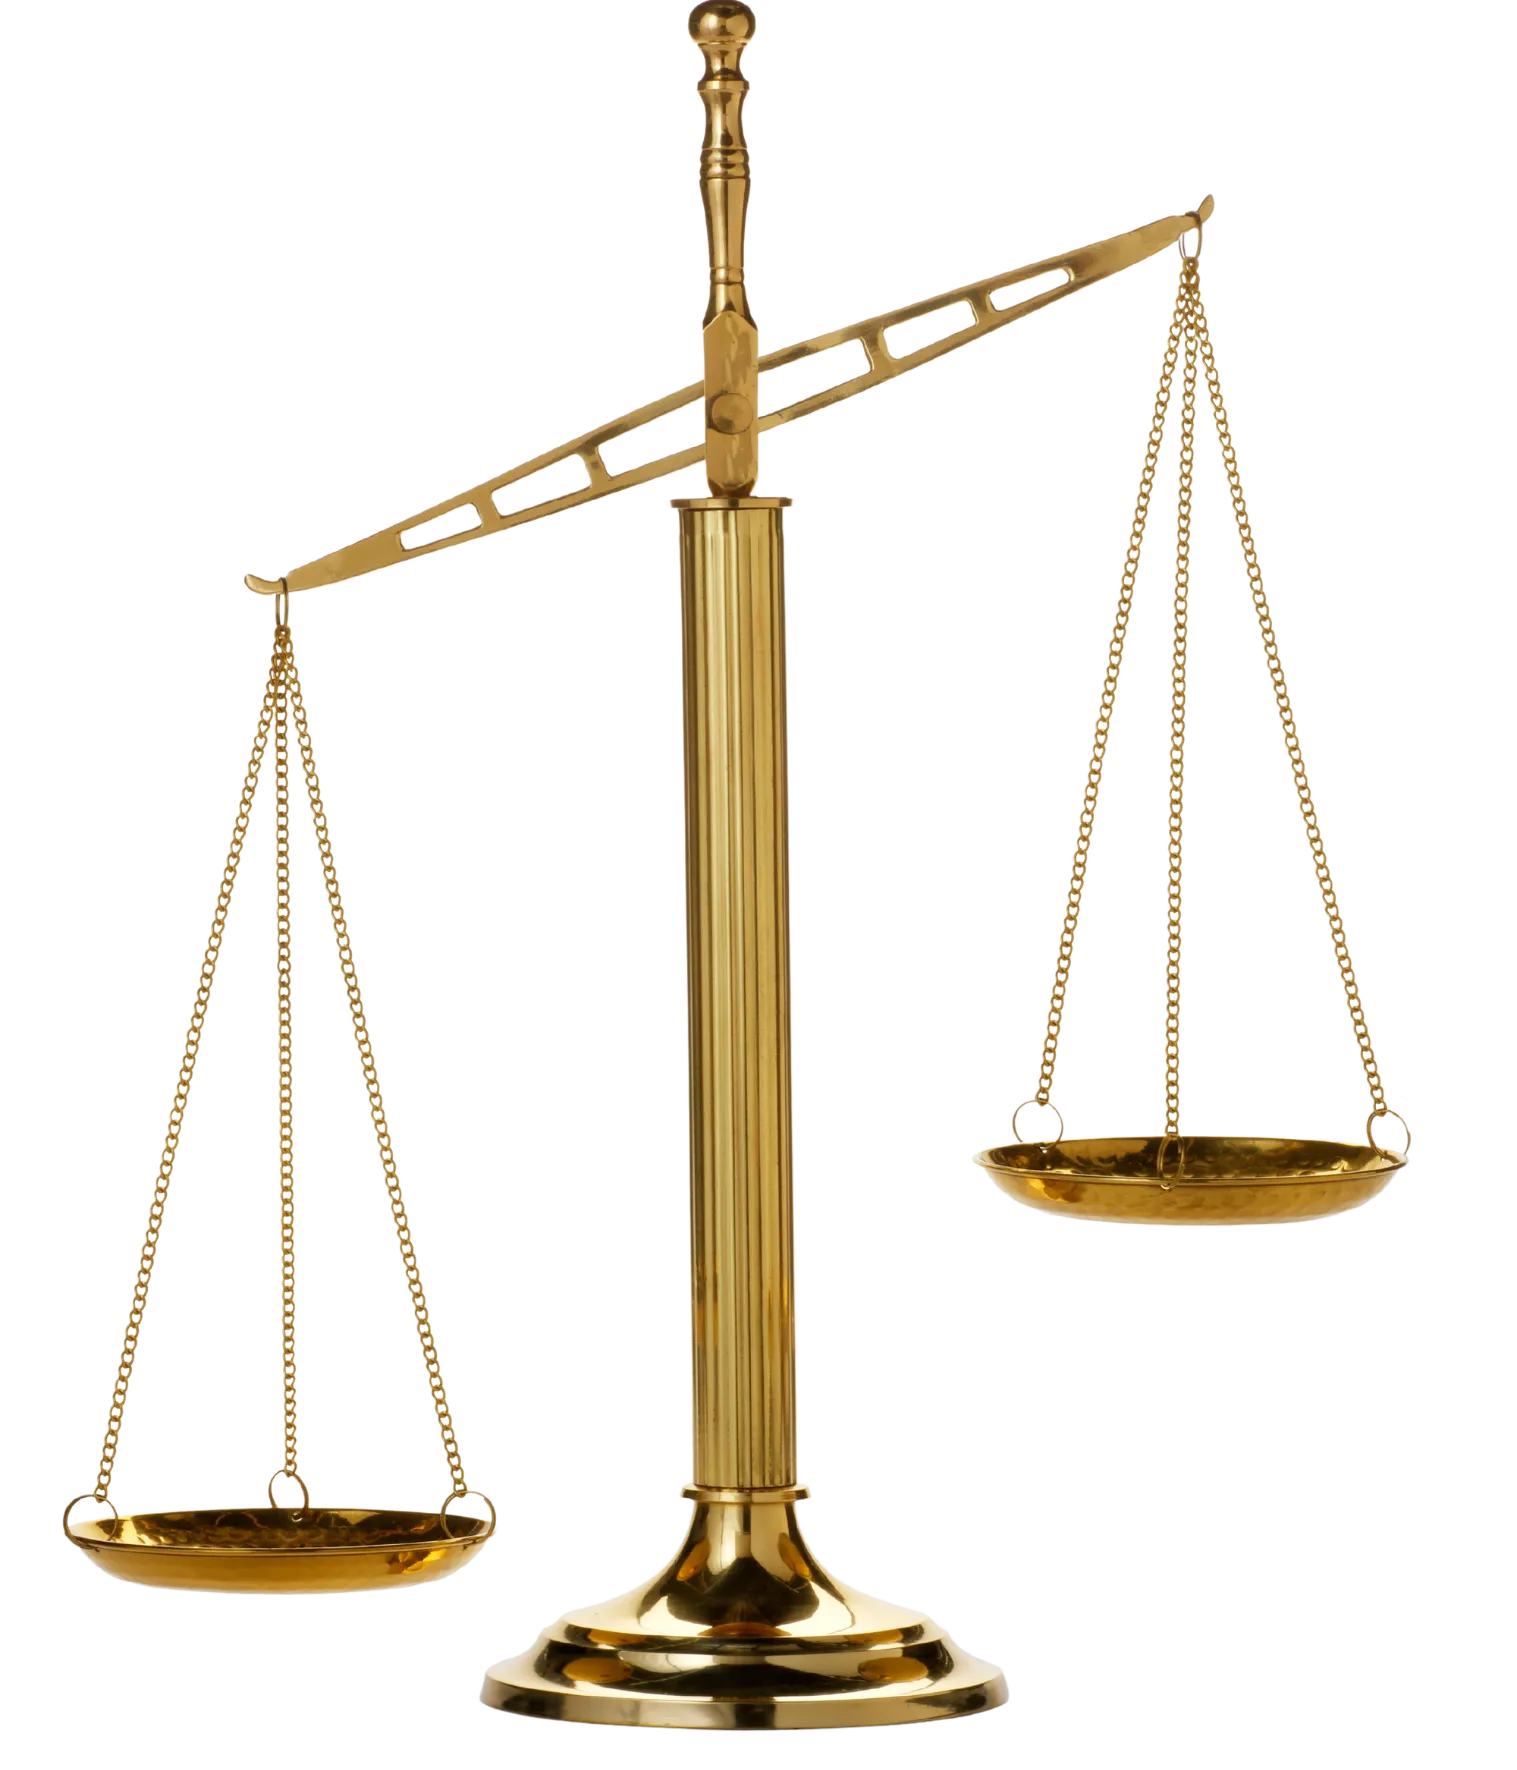 Balance Scales symblizing justice